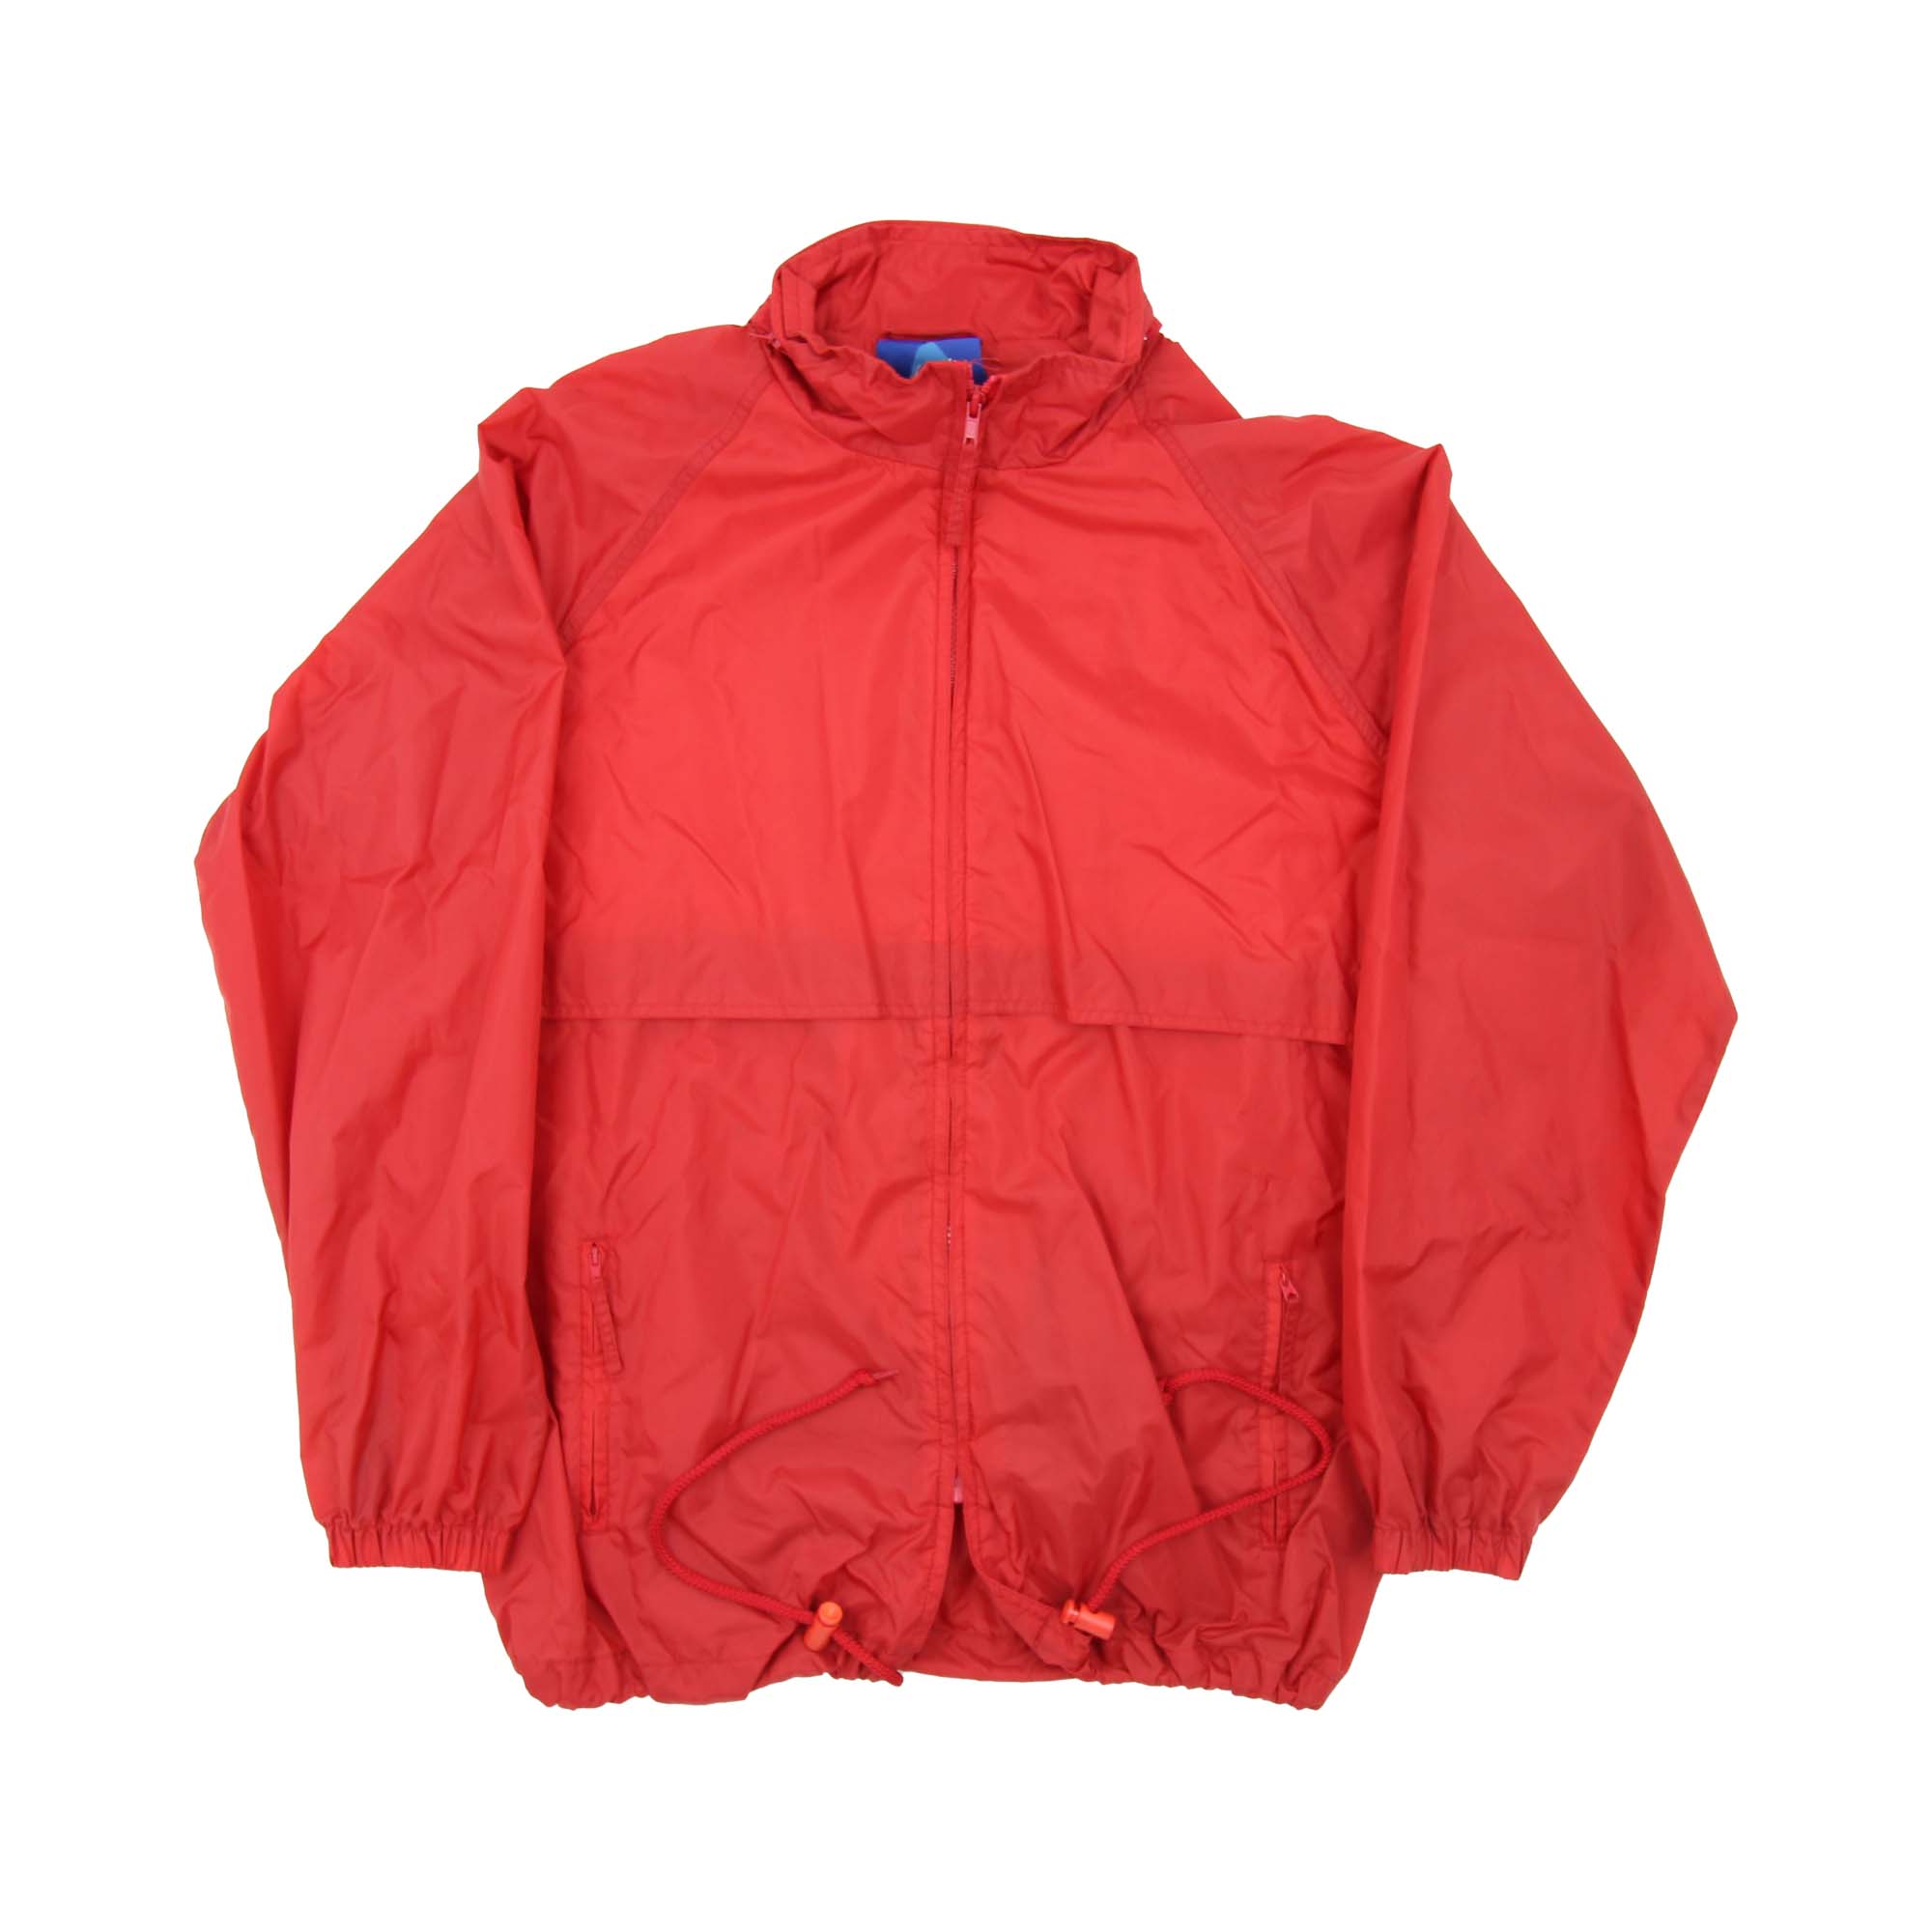 Acadia Rain Jacket Red - L